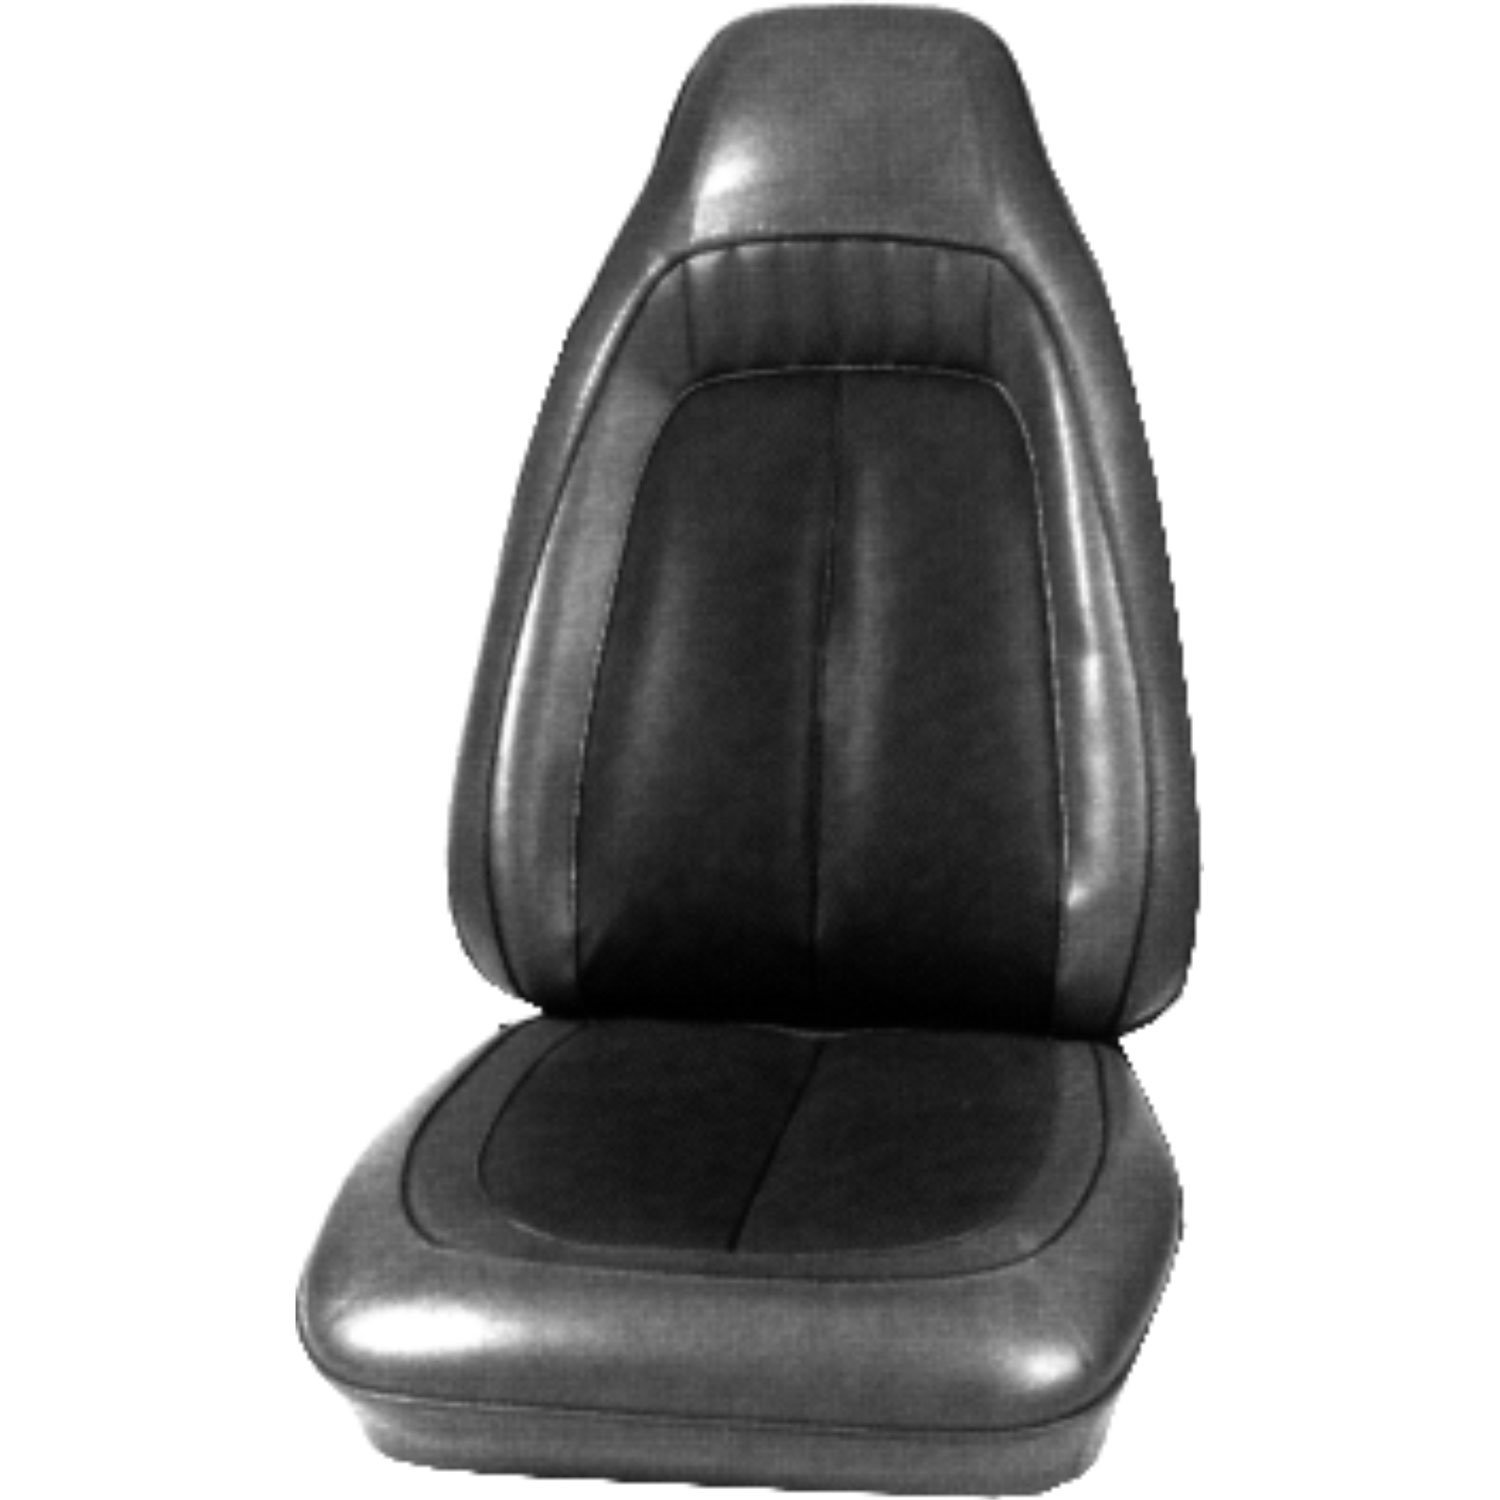 BUCKET seat covers RR/SAT/GTX/SUPBIR